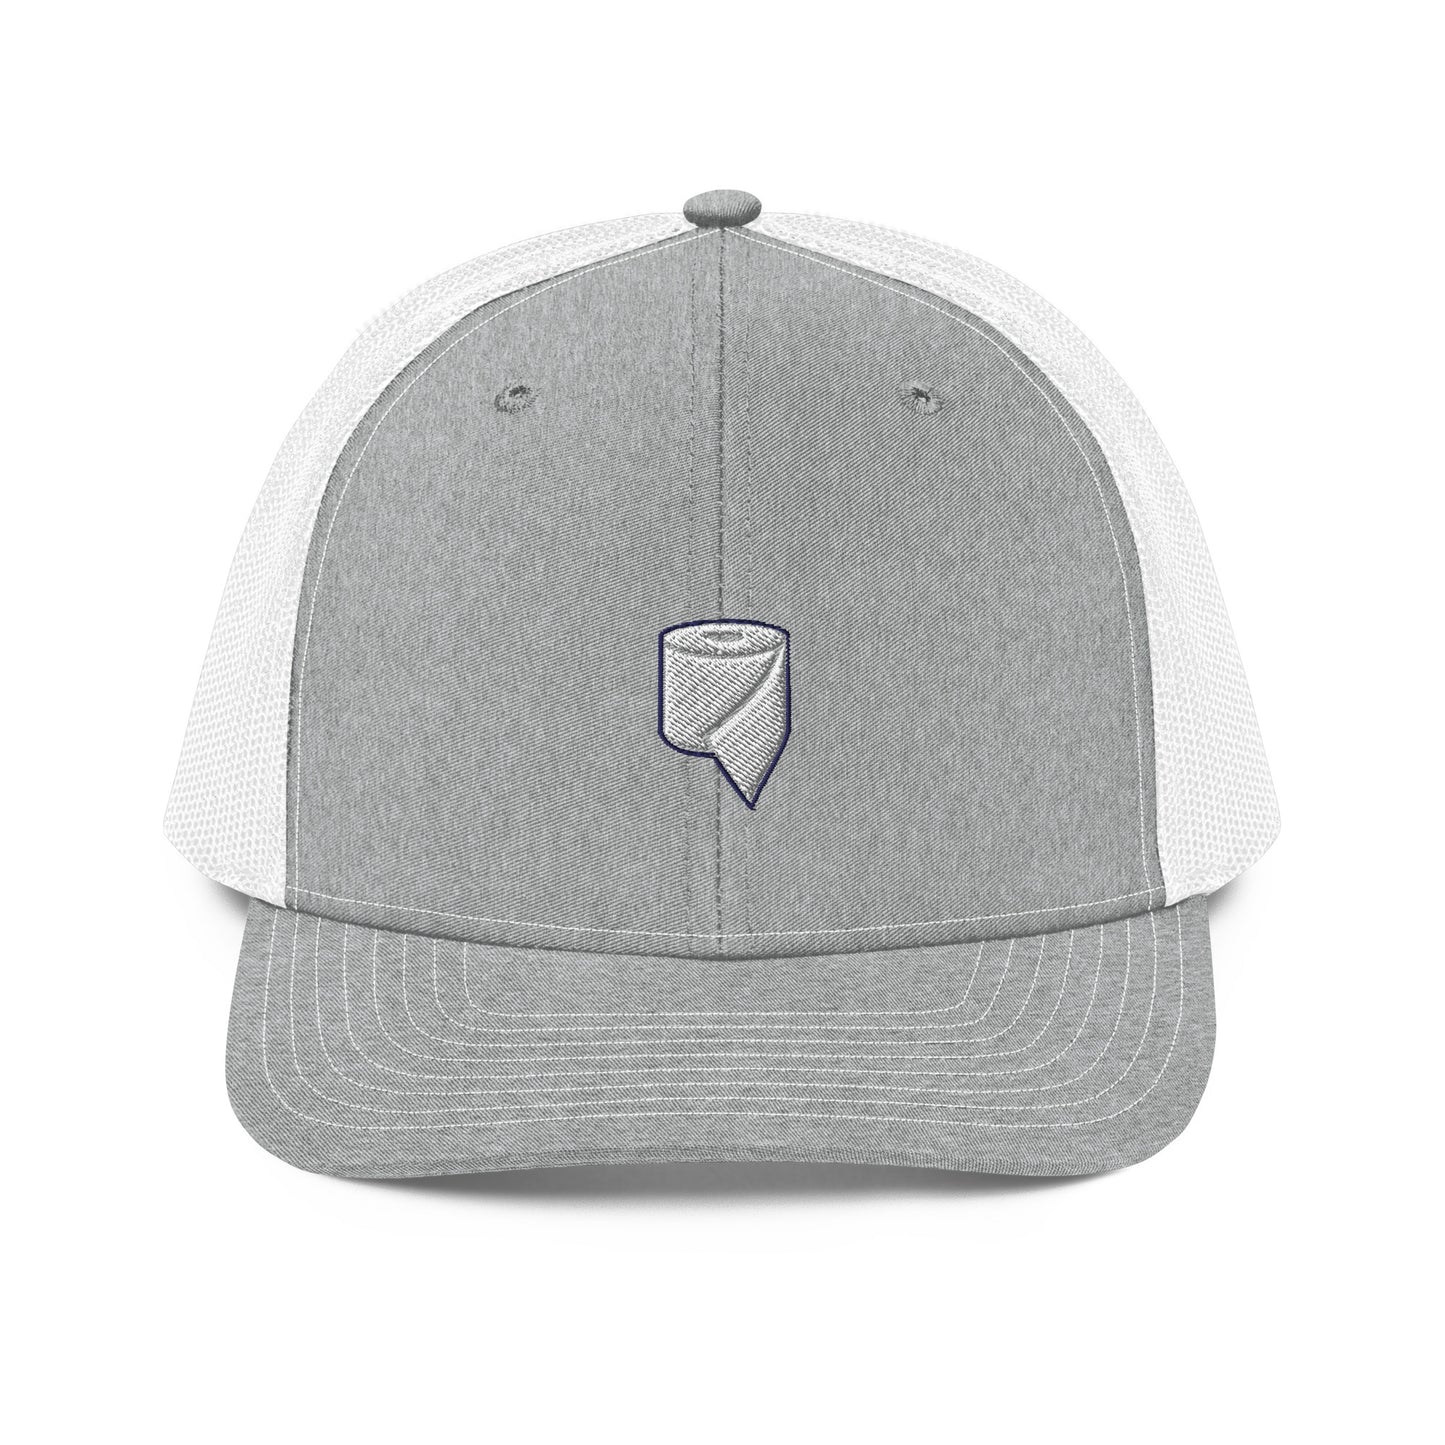 Gray Snapback Trucker Hat - The Roll